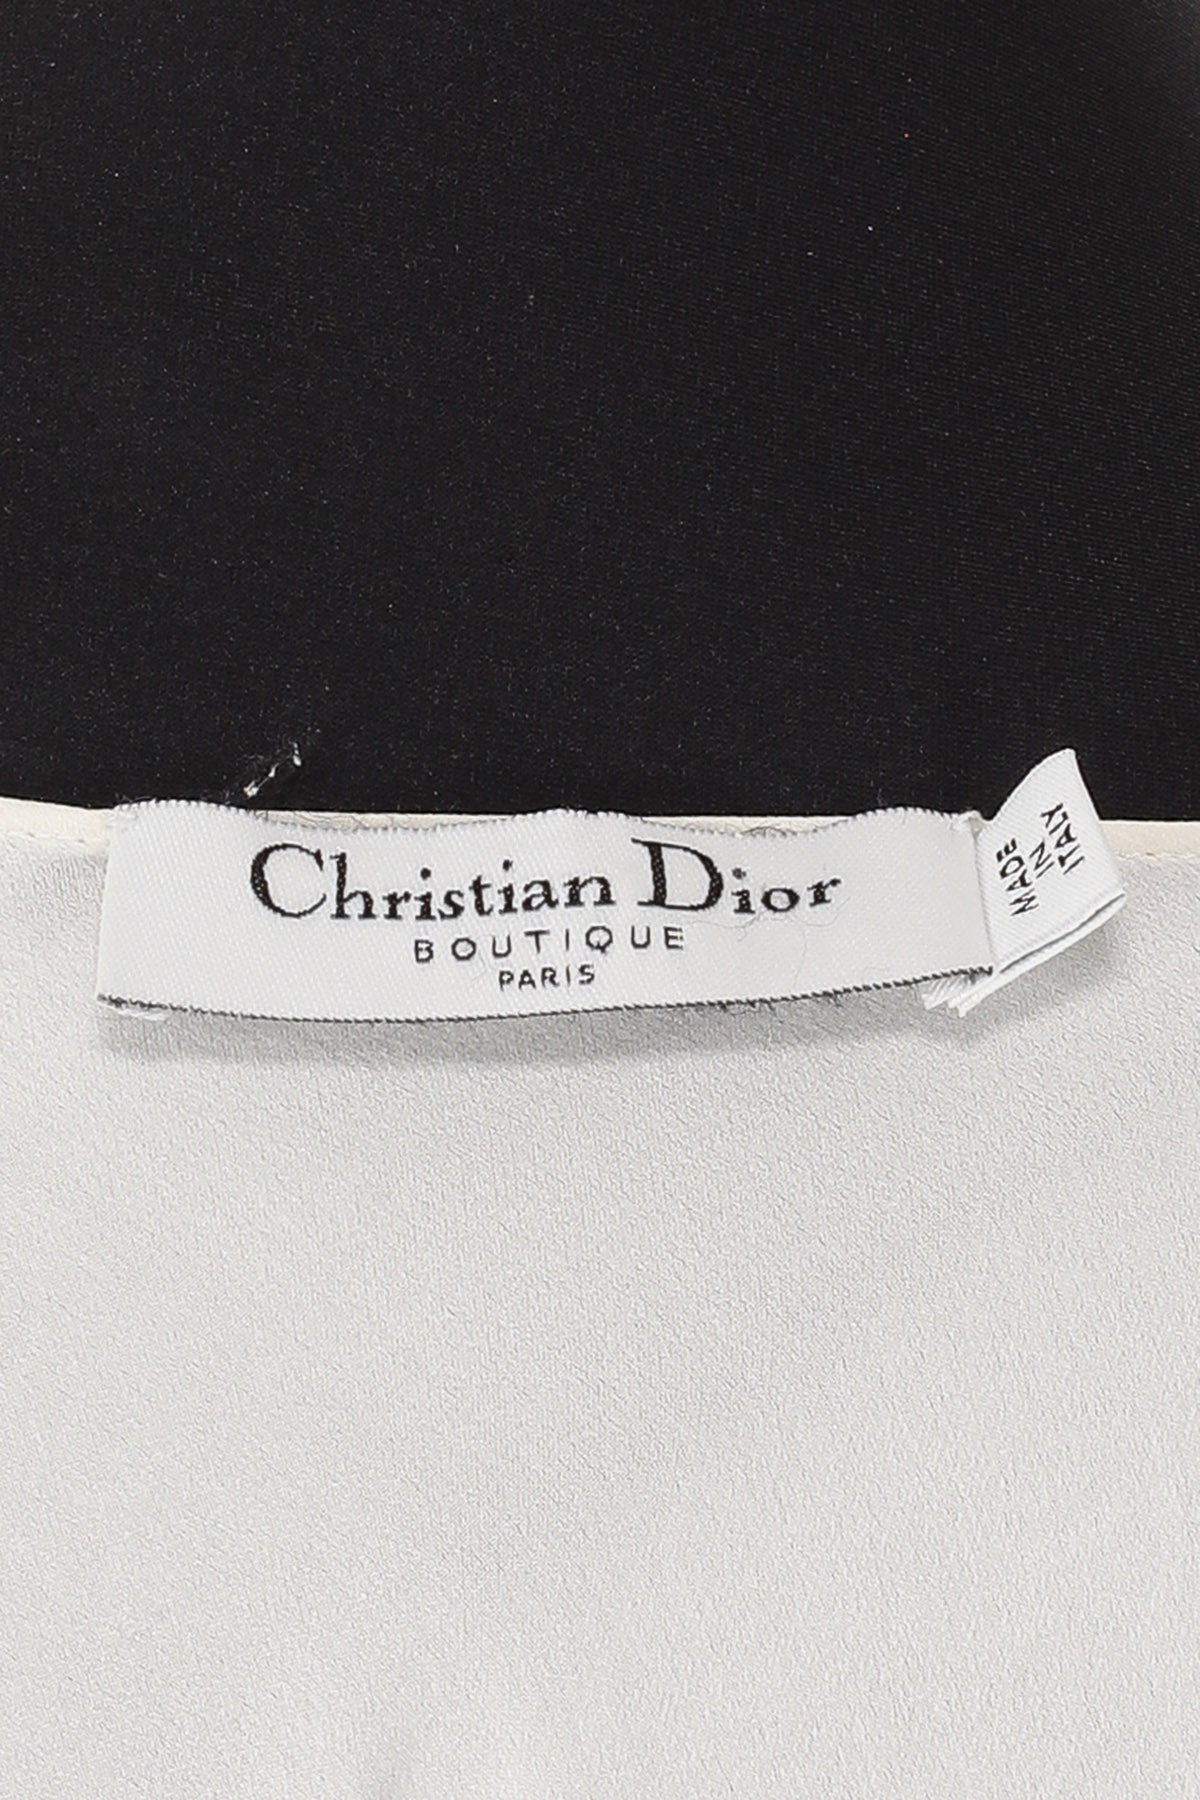 Christian Dior White Flowy Blouse